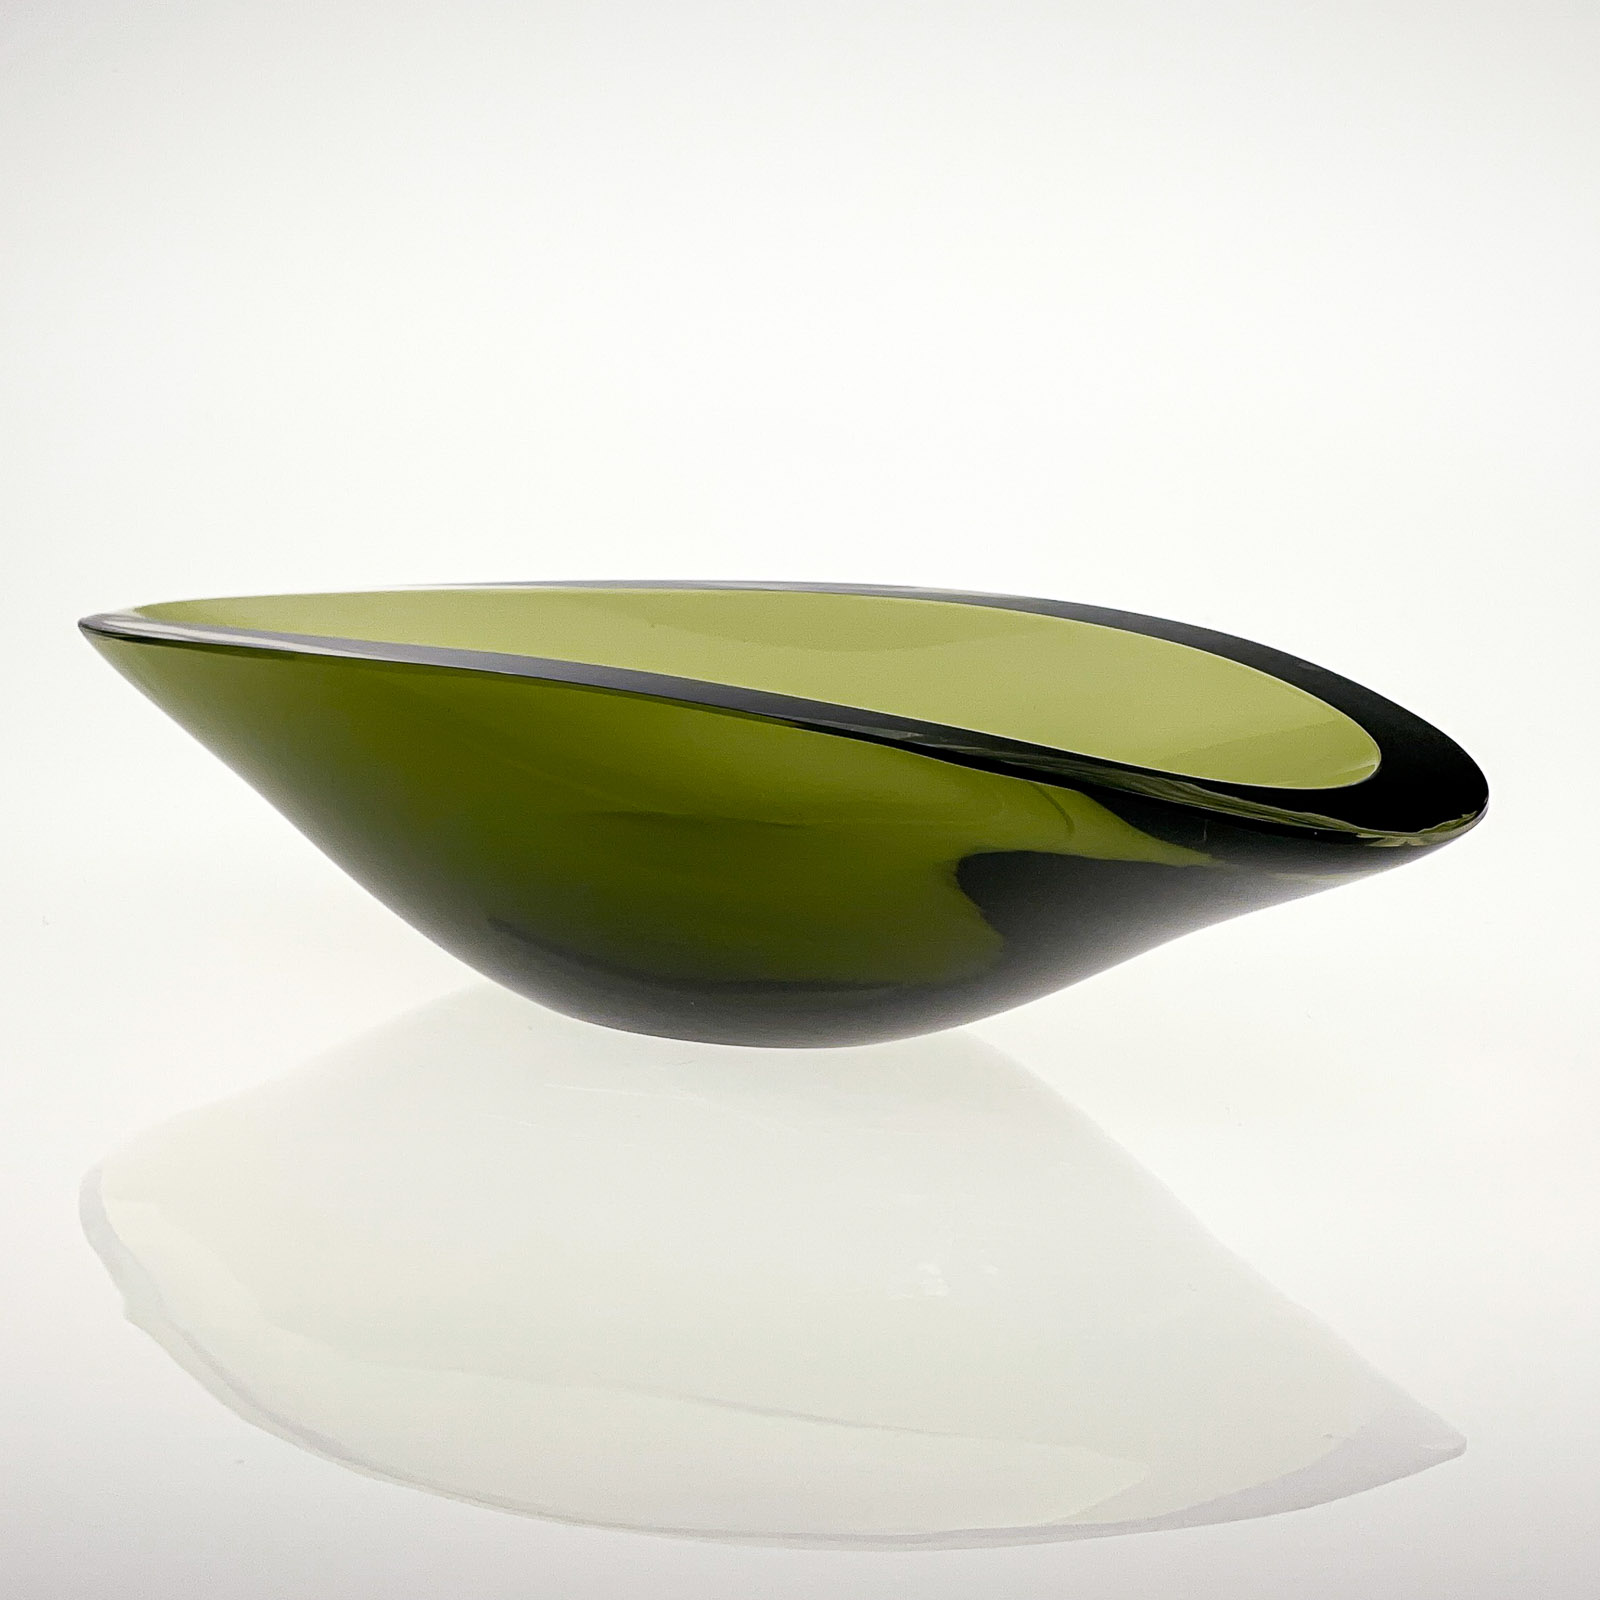 Kaj Franck - A green glass art-object "Pajunlehti" or "Willowleaf", model KF210 - Nuutajärvi-Notsjö Finland 1954